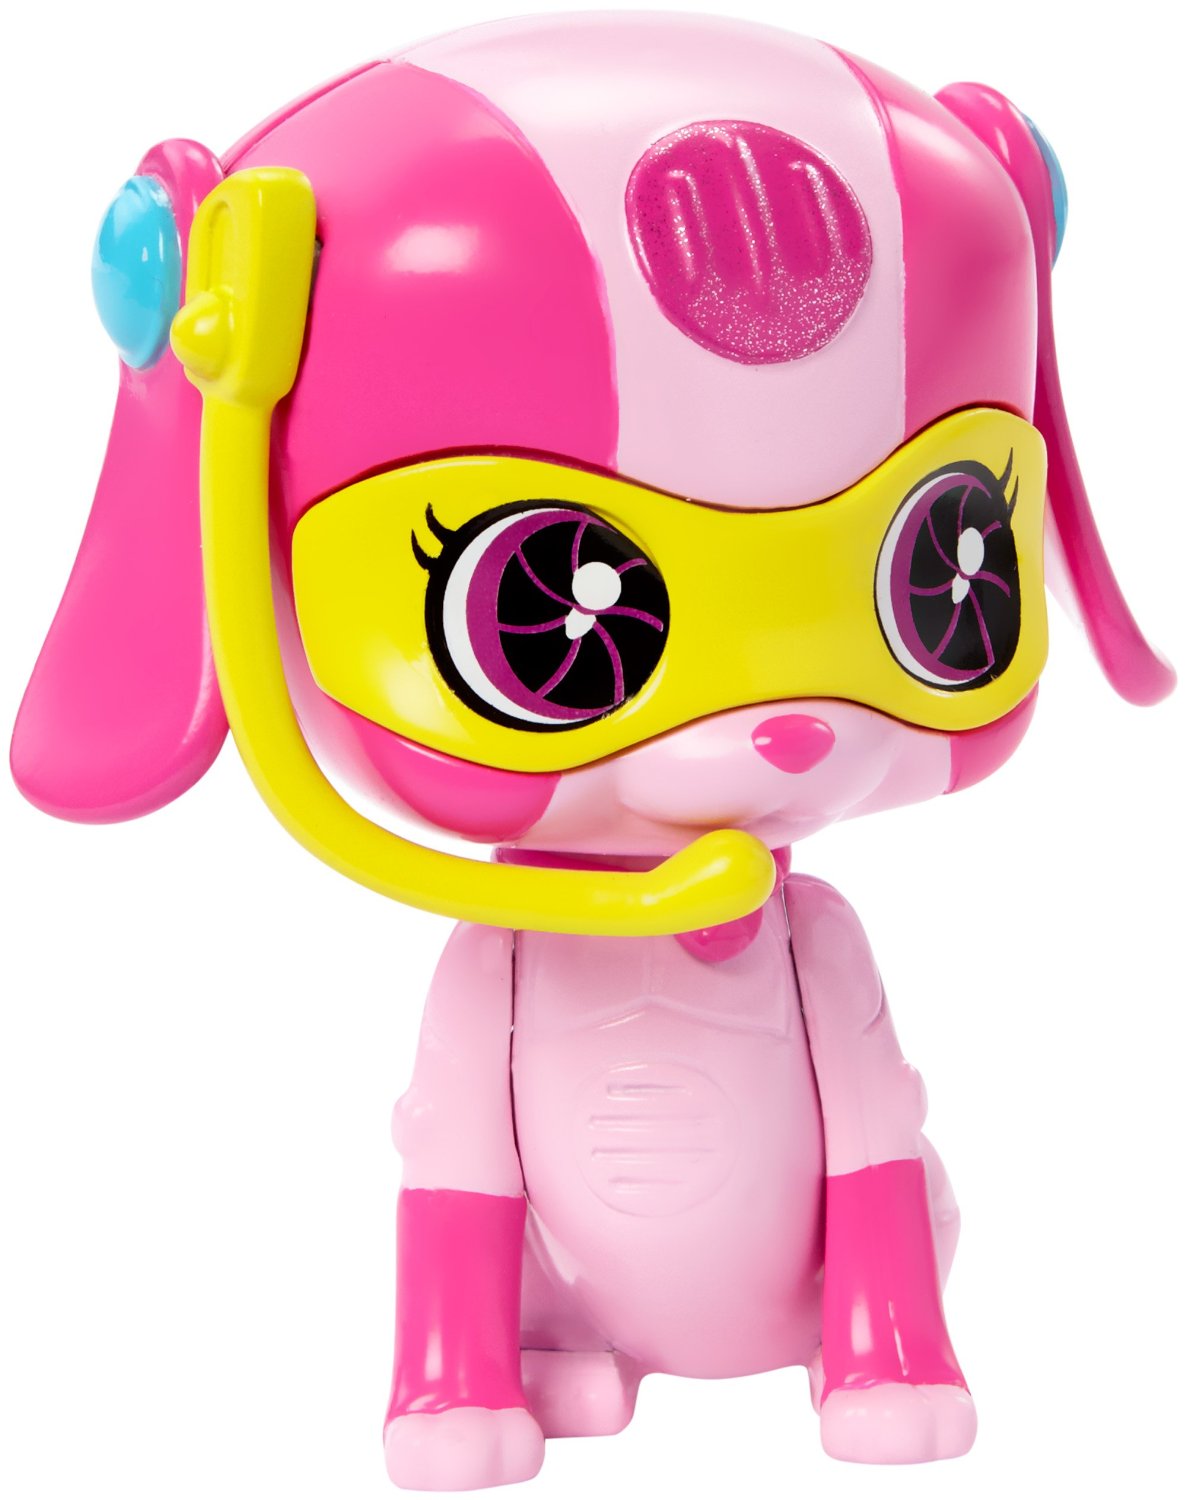 Hero pets. Супер питомец Барби. Barbie Spy Squad игрушка щенок. Собака робот игрушка Барби.